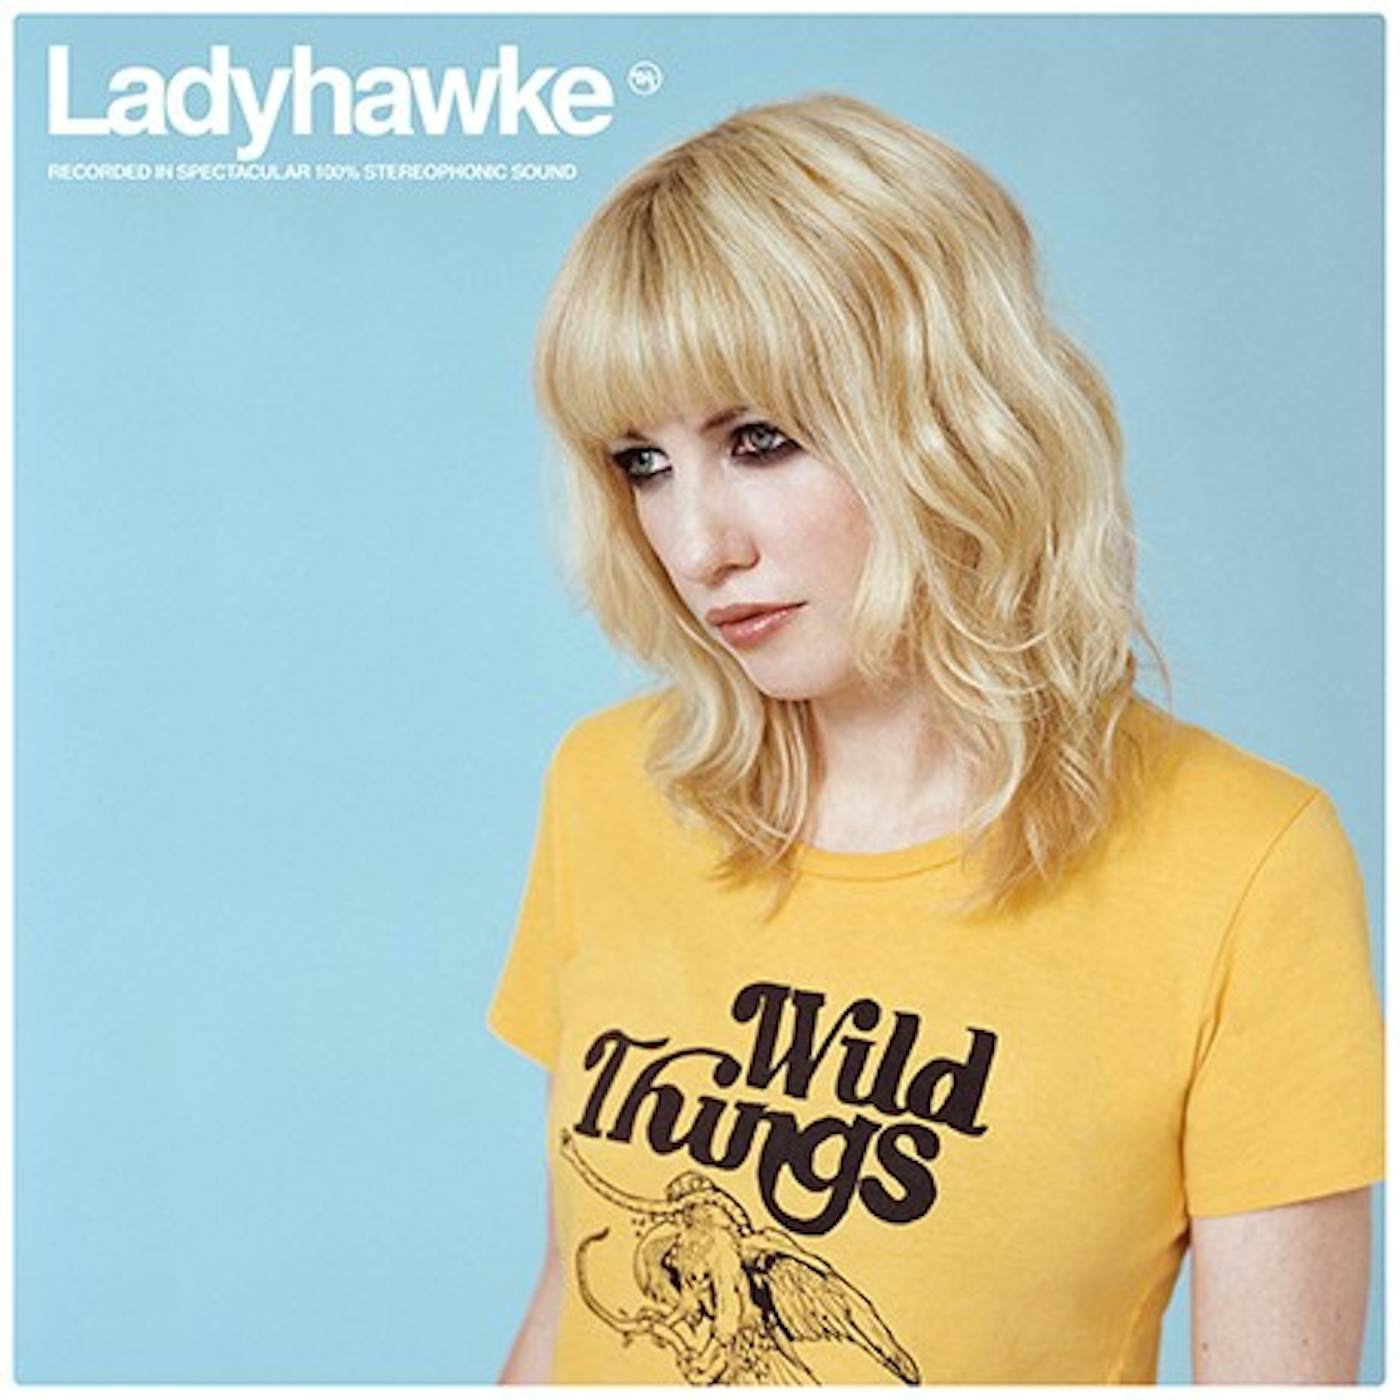 Ladyhawke Wild Things (Garage Sale)